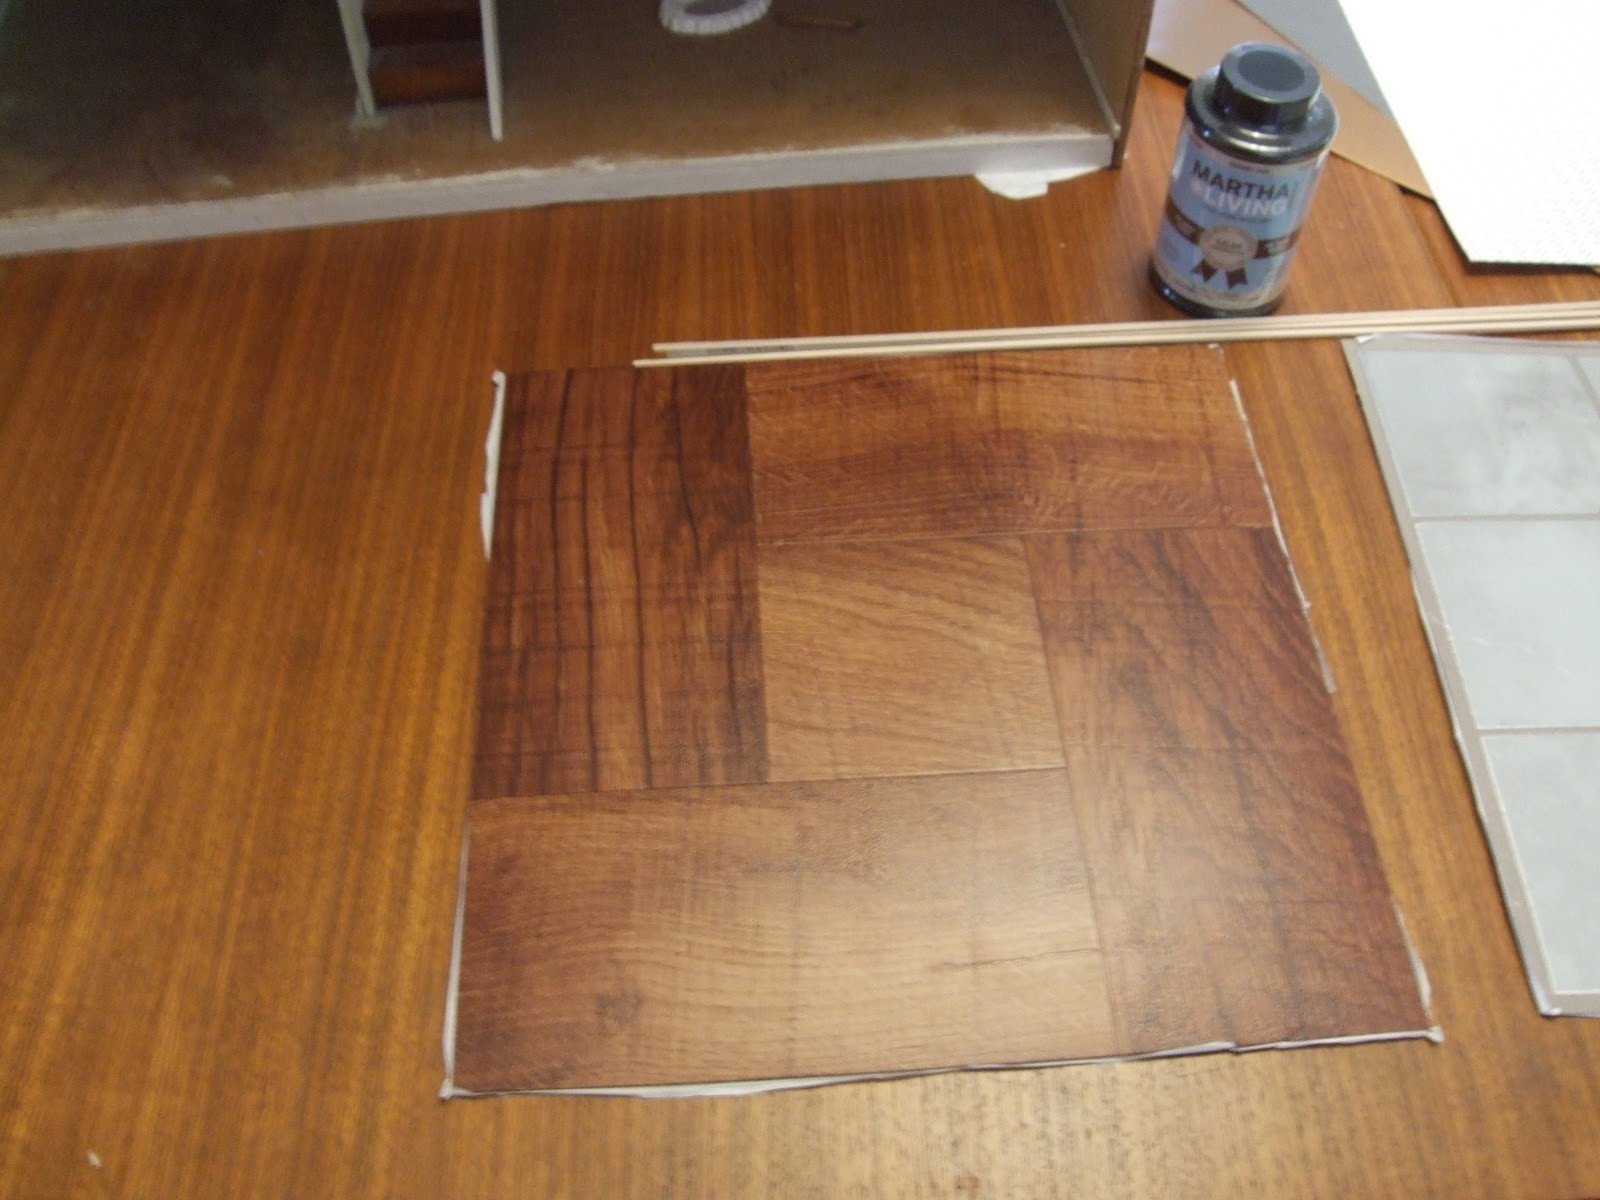 Best ideas about DIY Vinyl Flooring
. Save or Pin DIY hardwood dollhouse flooring from vinyl tiles Now.